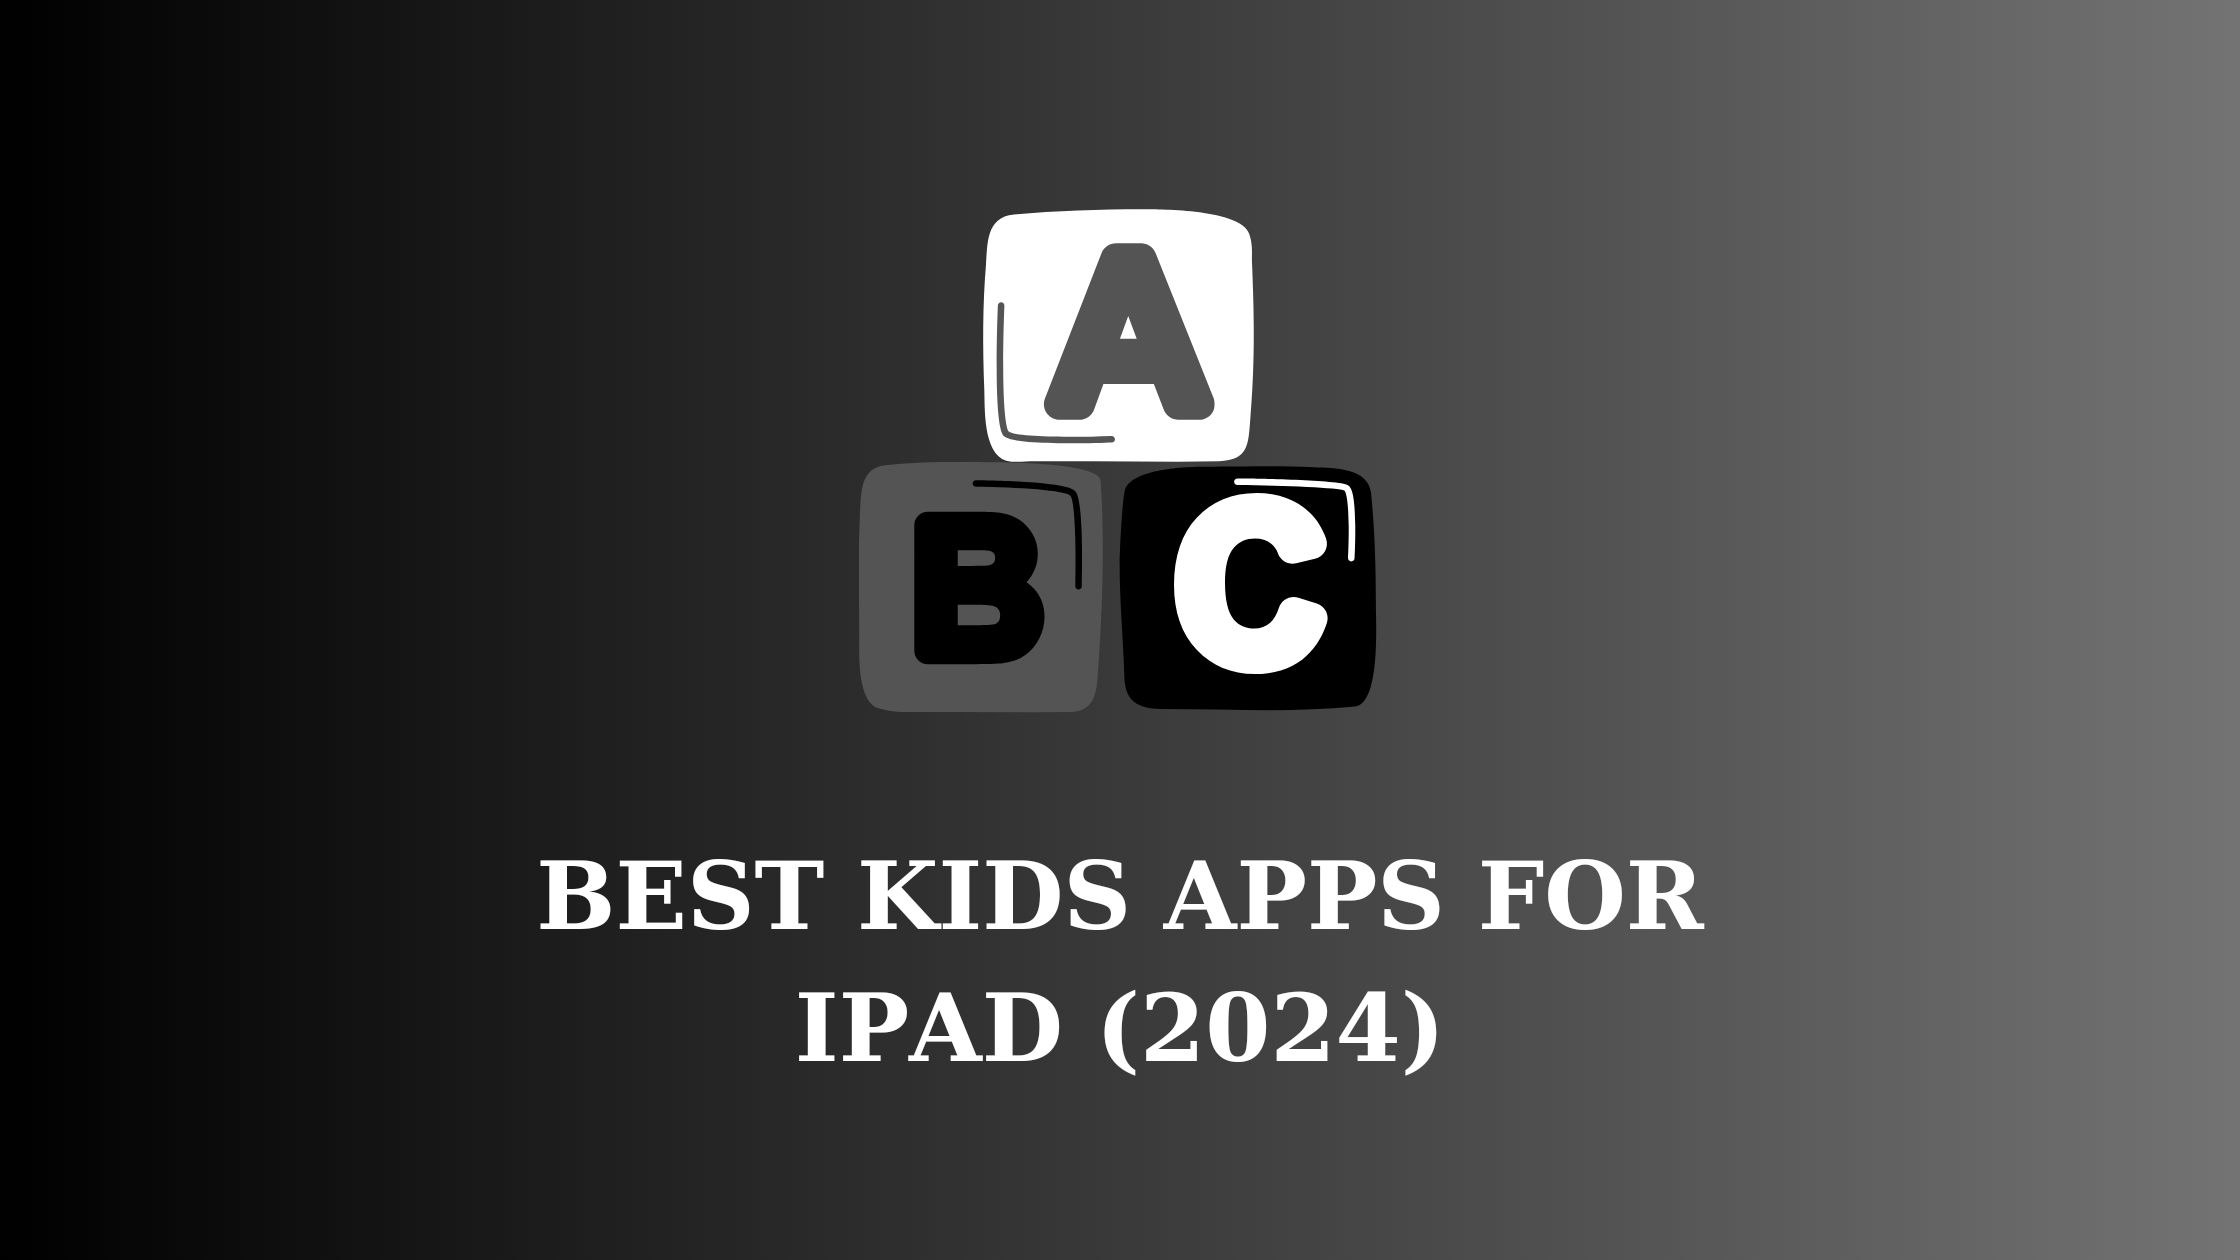 Best kids apps for iPad